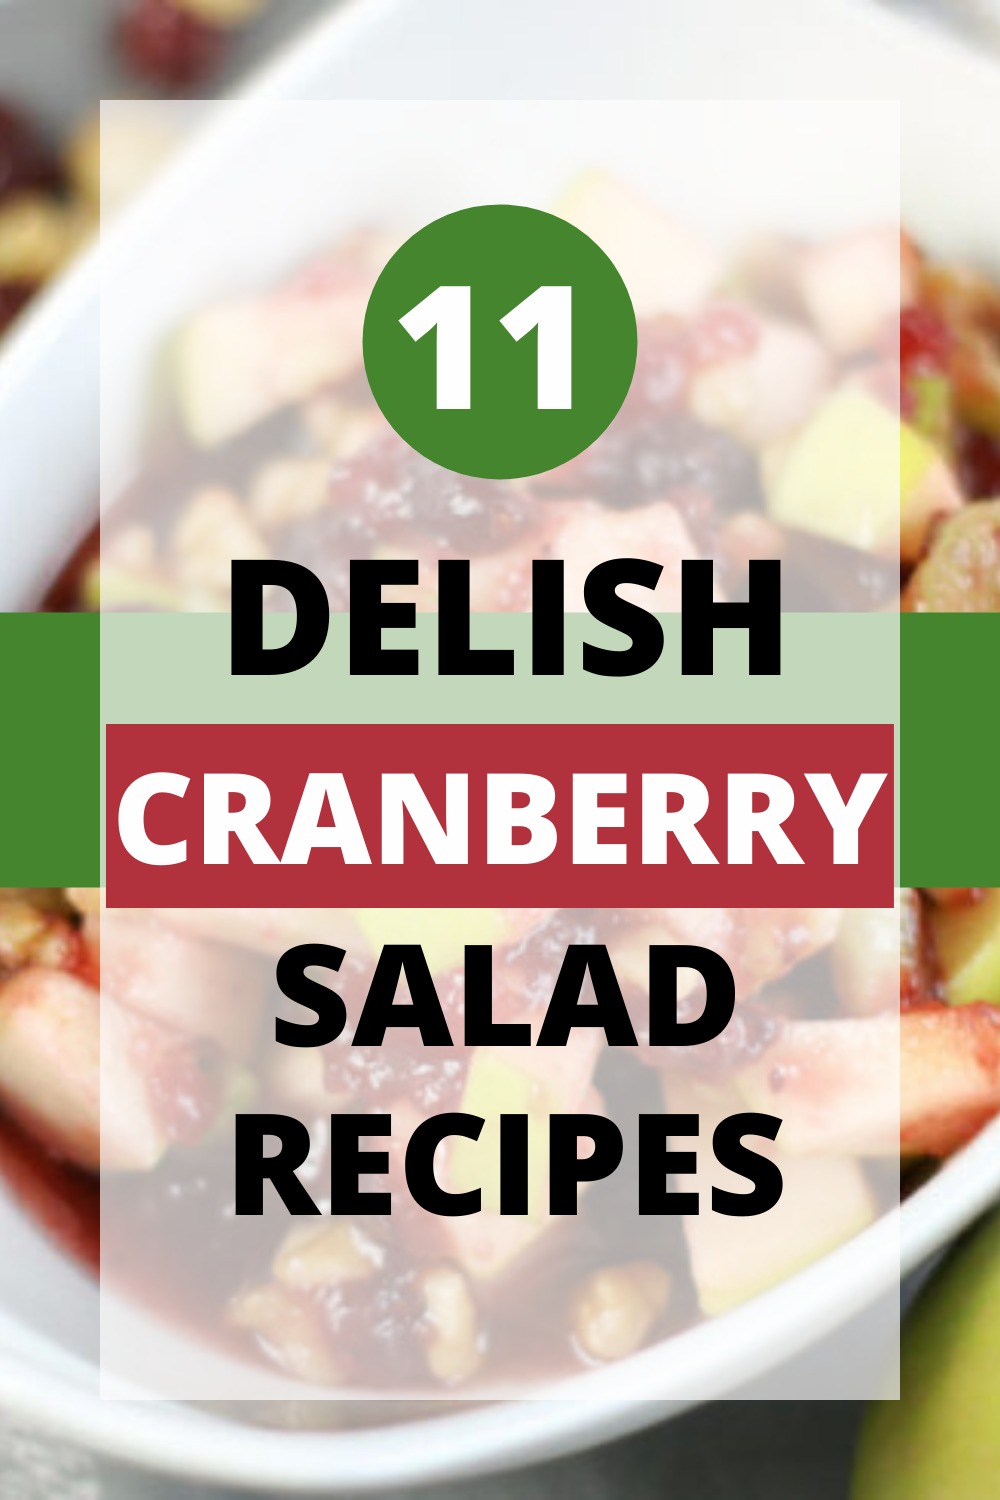 Pin showing Delish Cranberry Salad Recipes